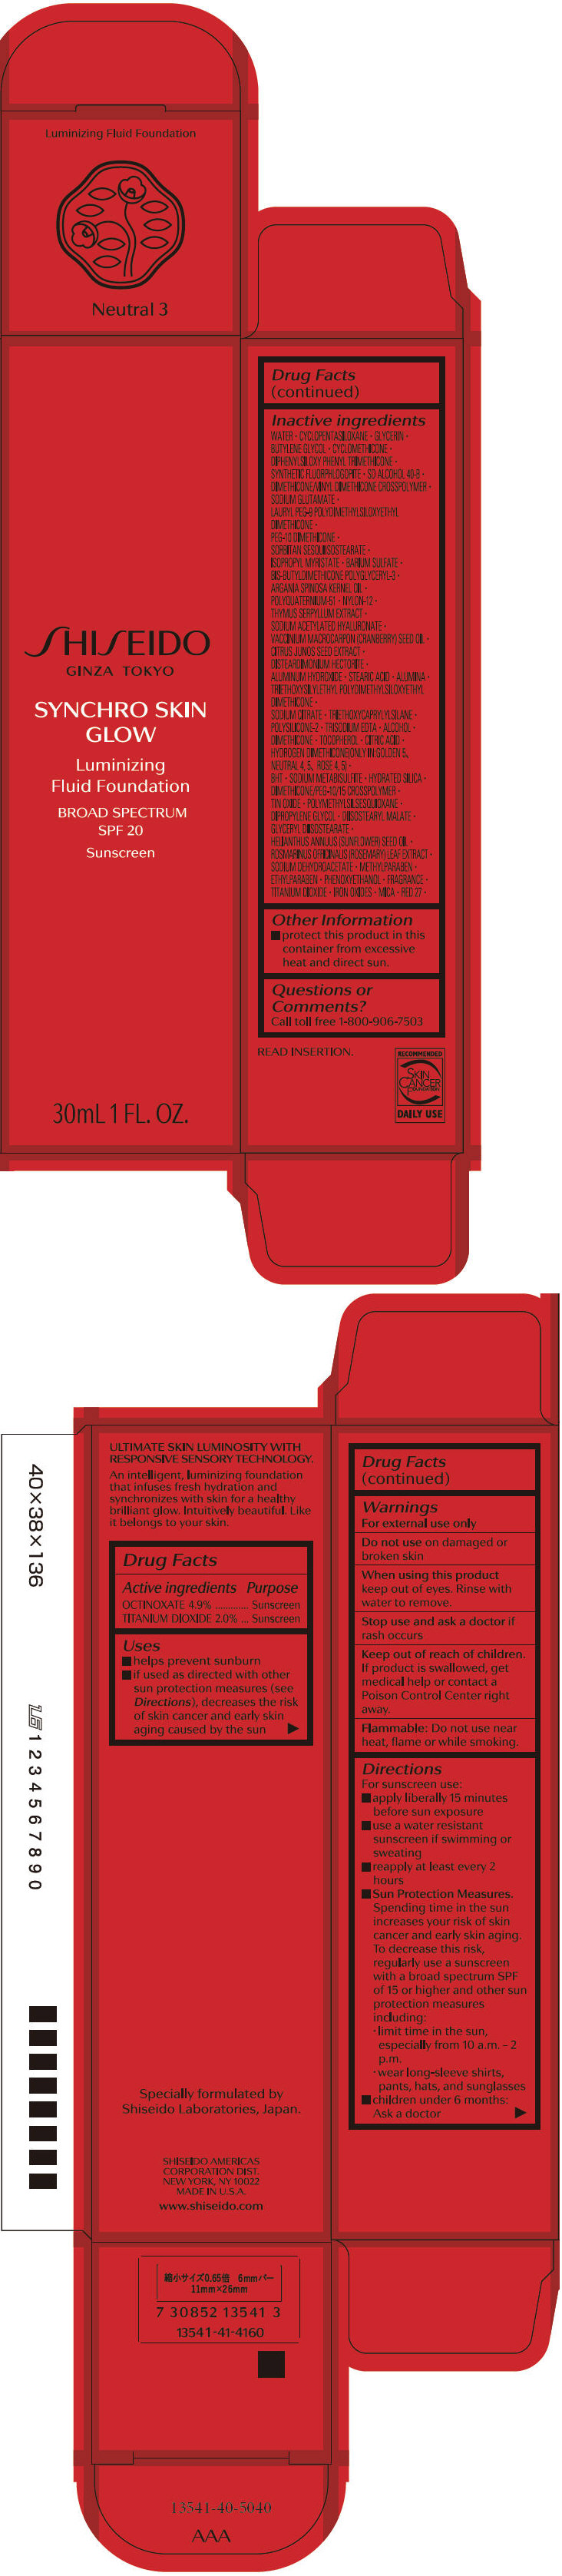 PRINCIPAL DISPLAY PANEL - 30 mL Bottle Carton - Neutral 3